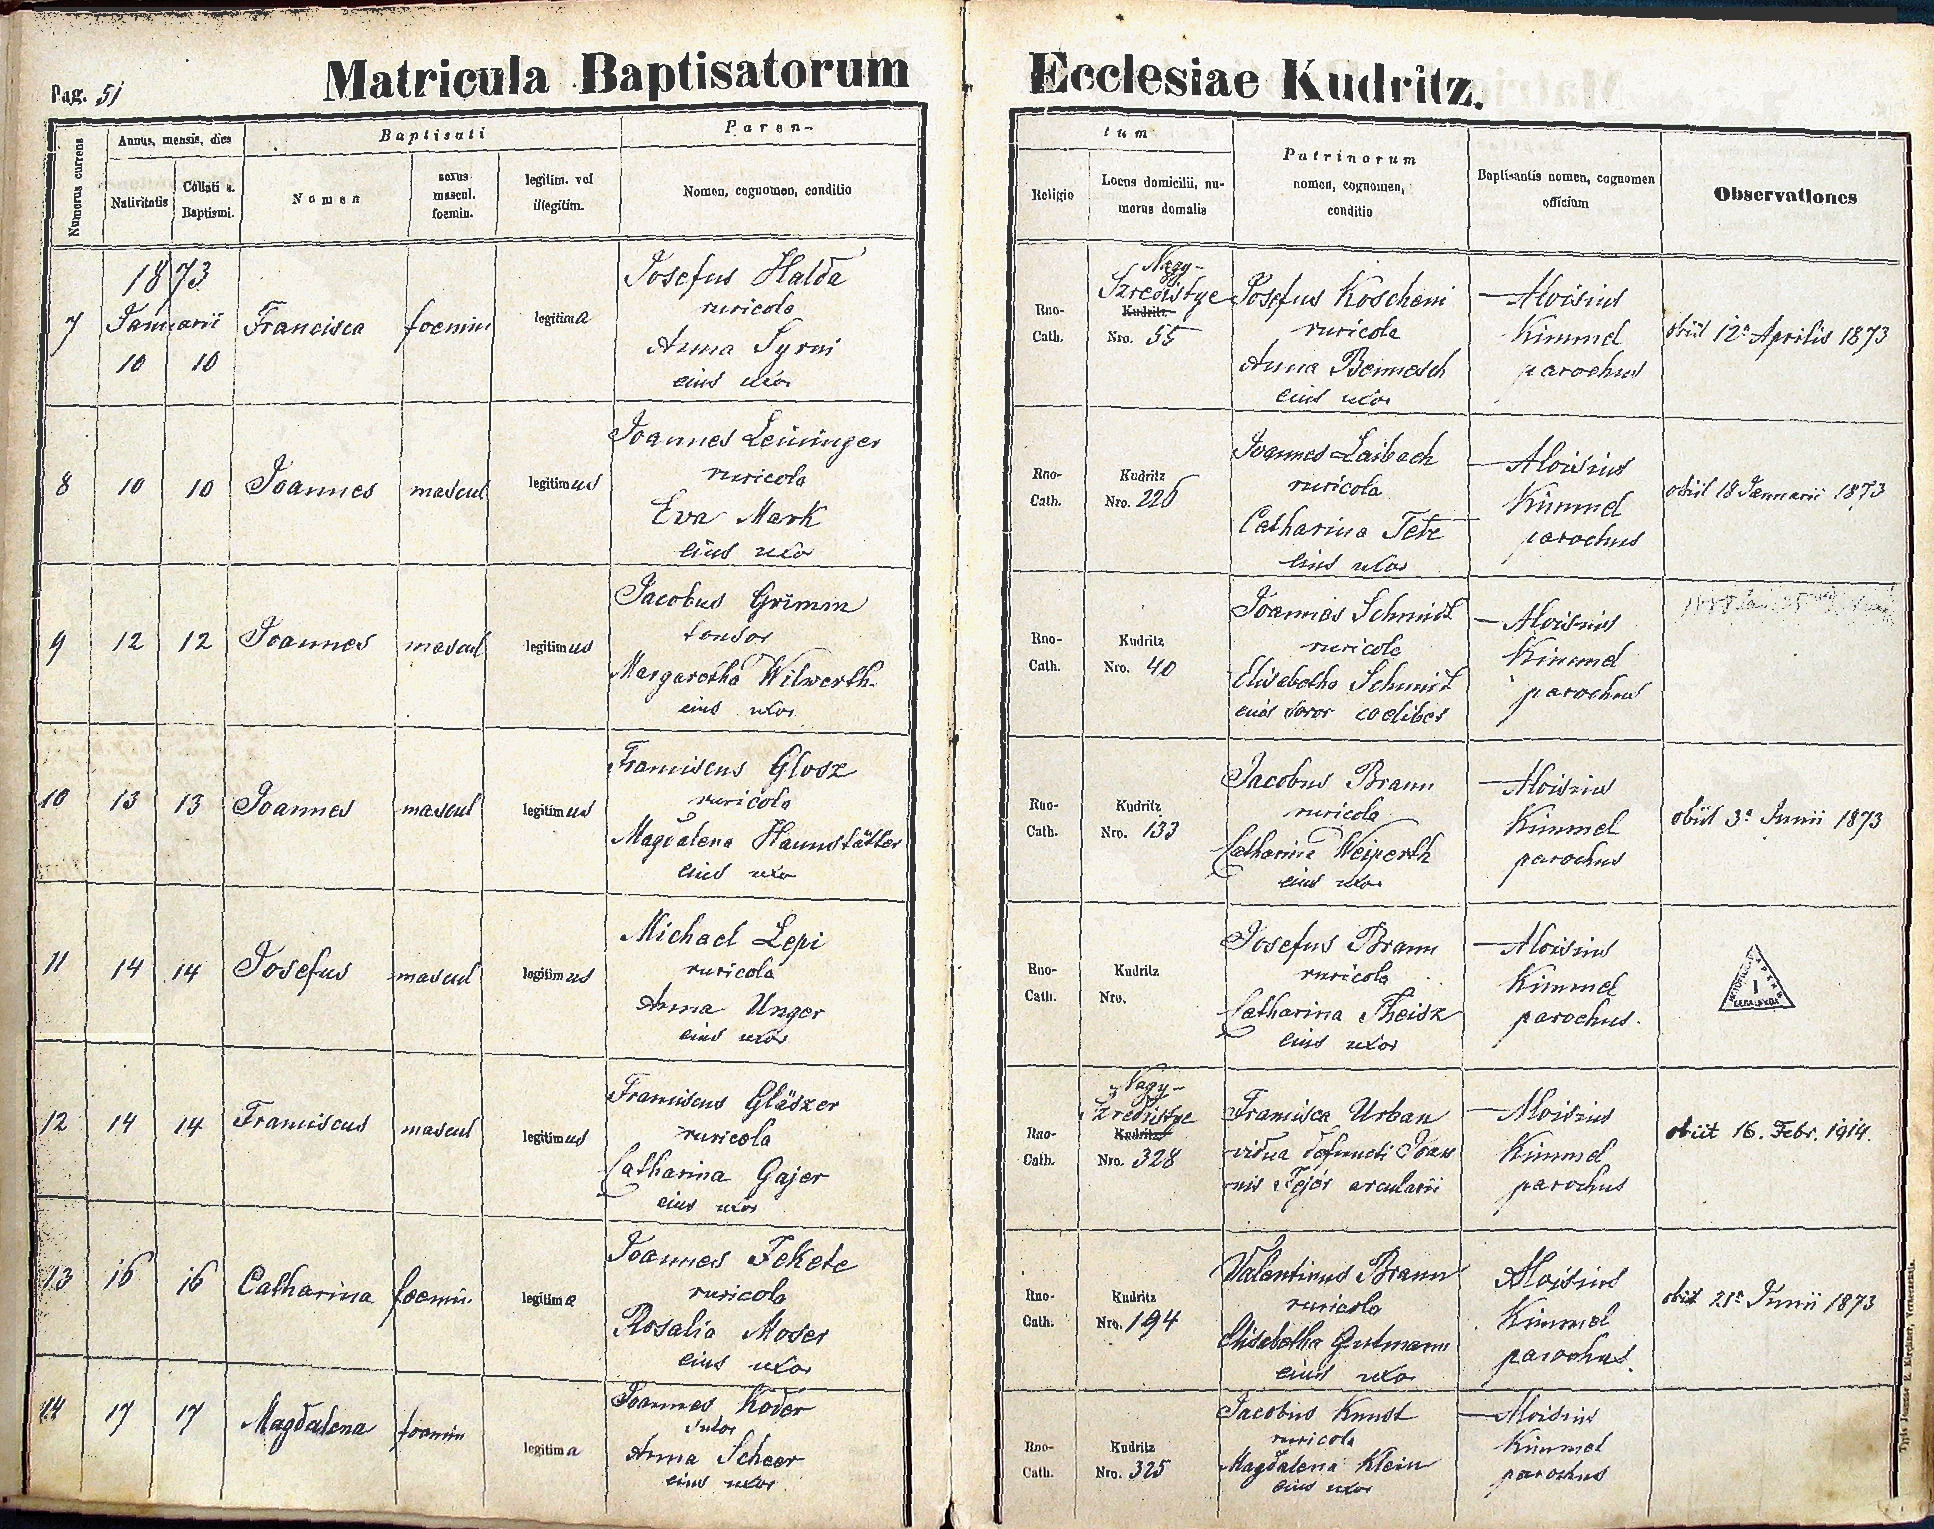 images/church_records/BIRTHS/1884-1899B/1886/051